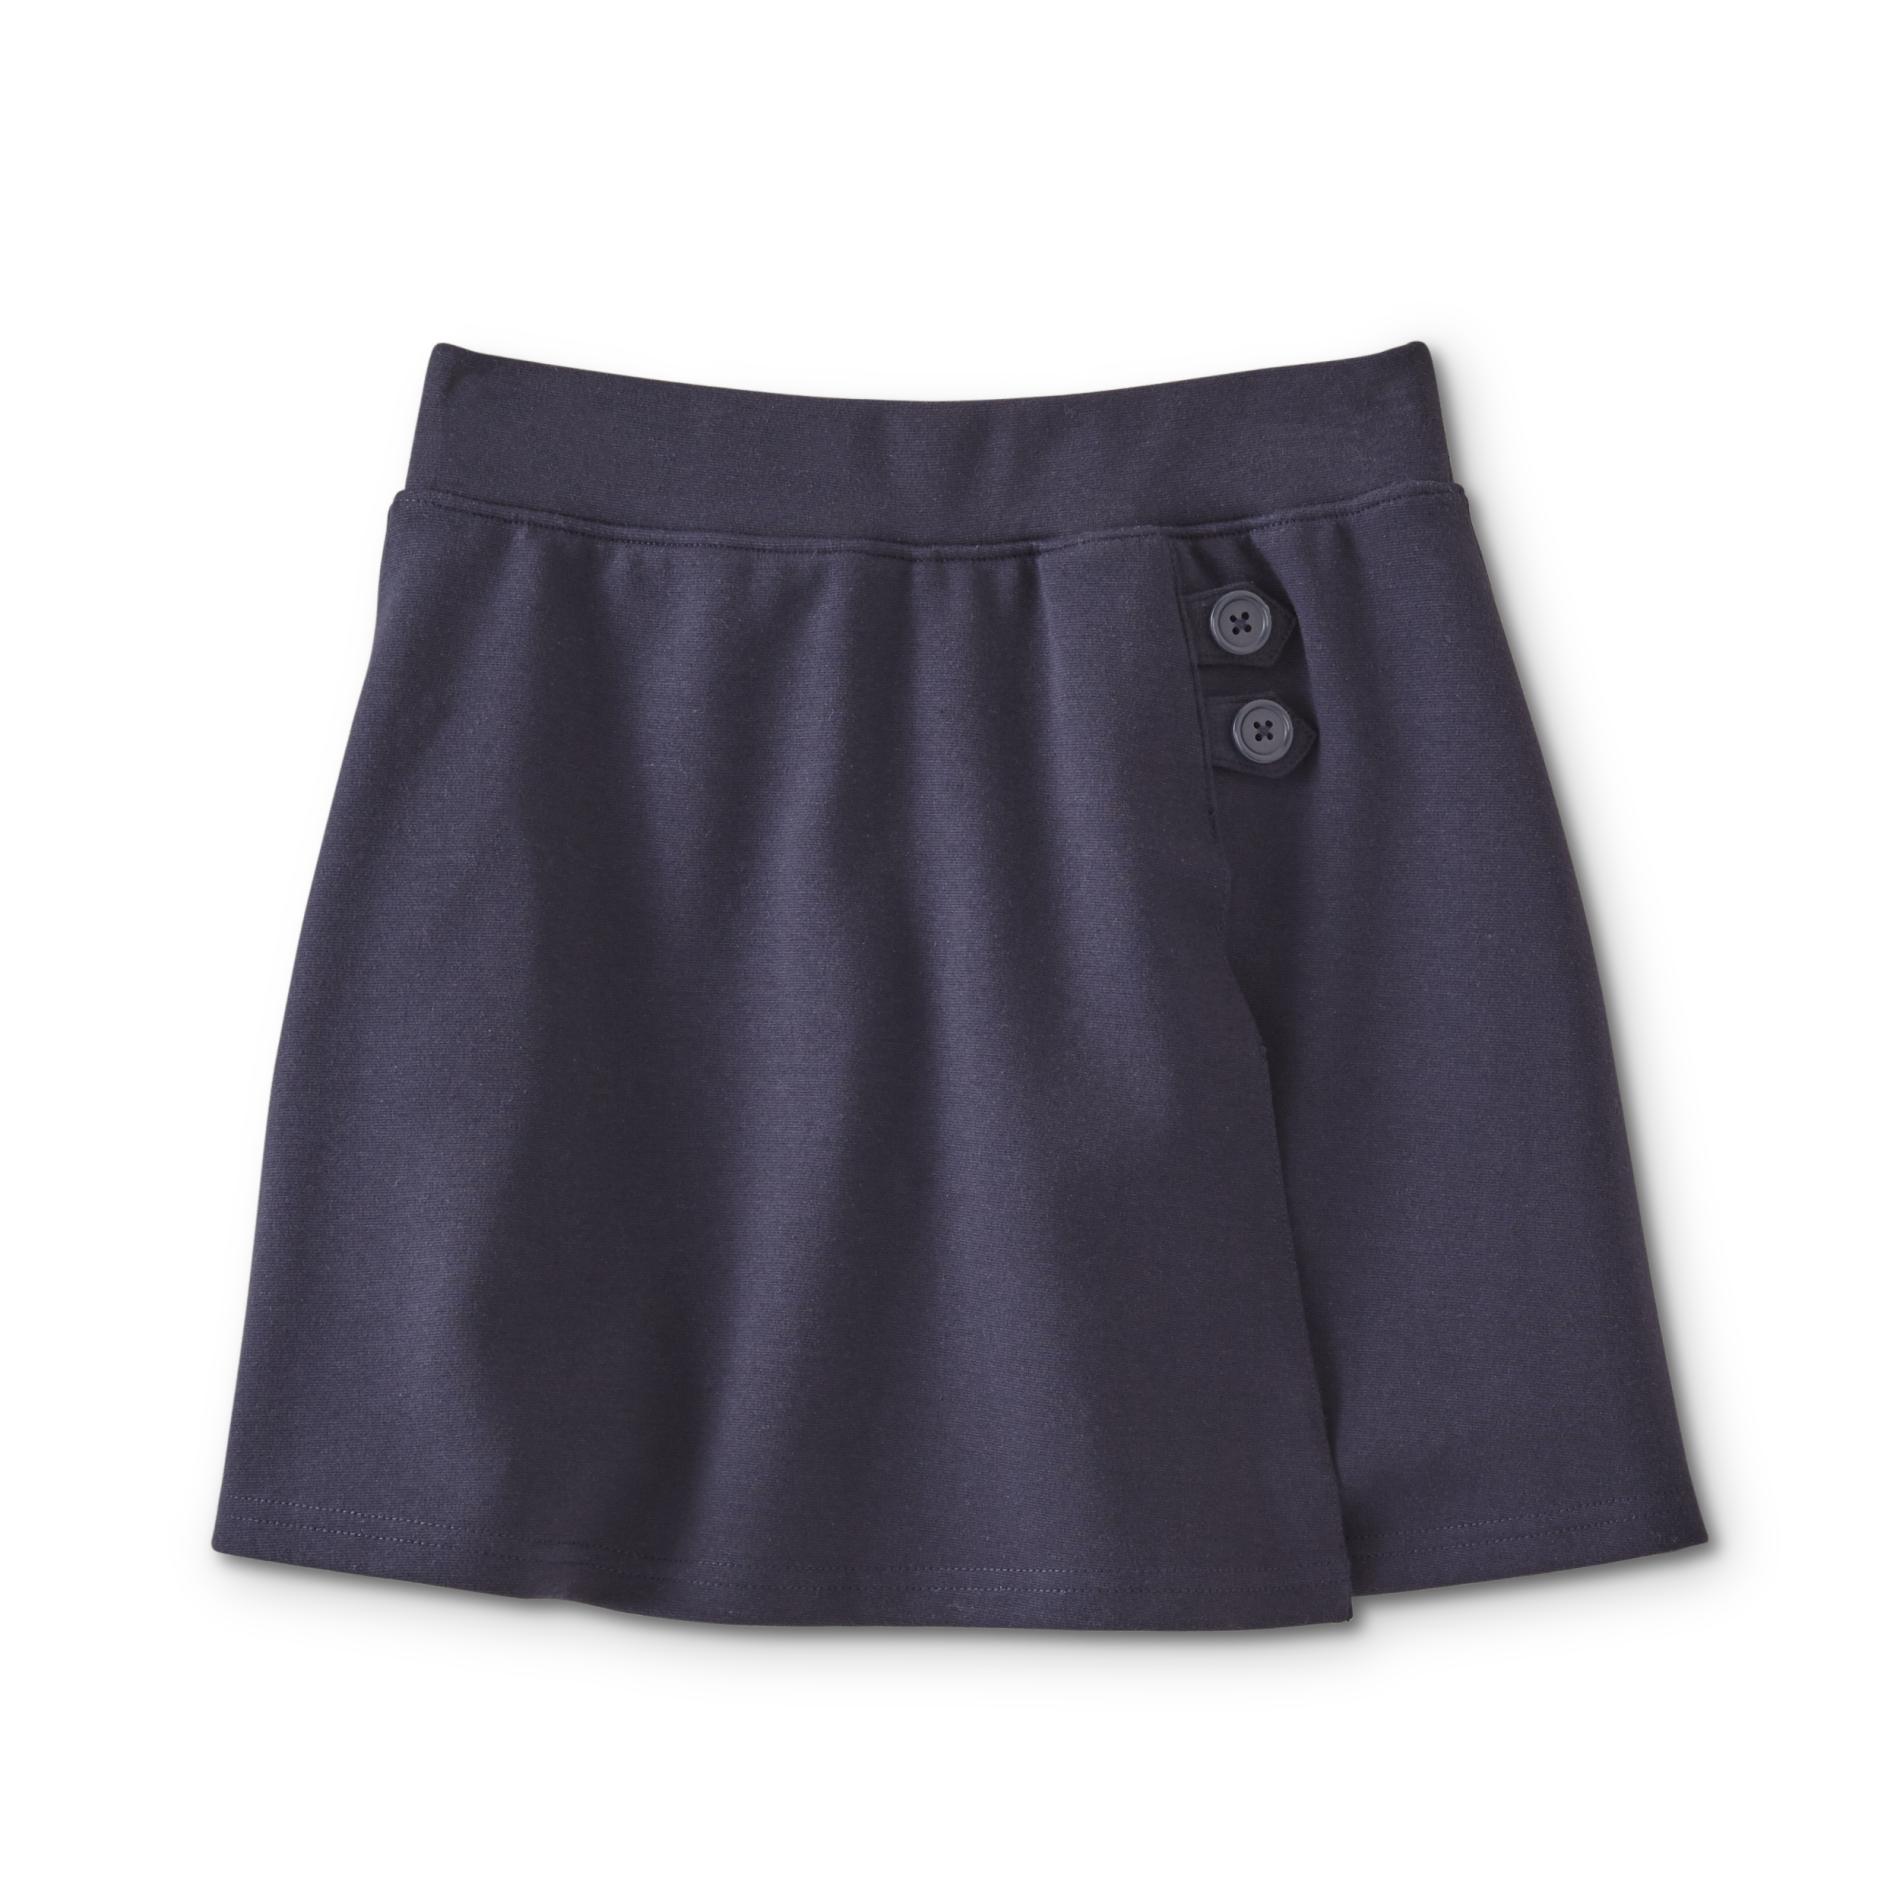 Basic Editions Girls' Scooter Skirt